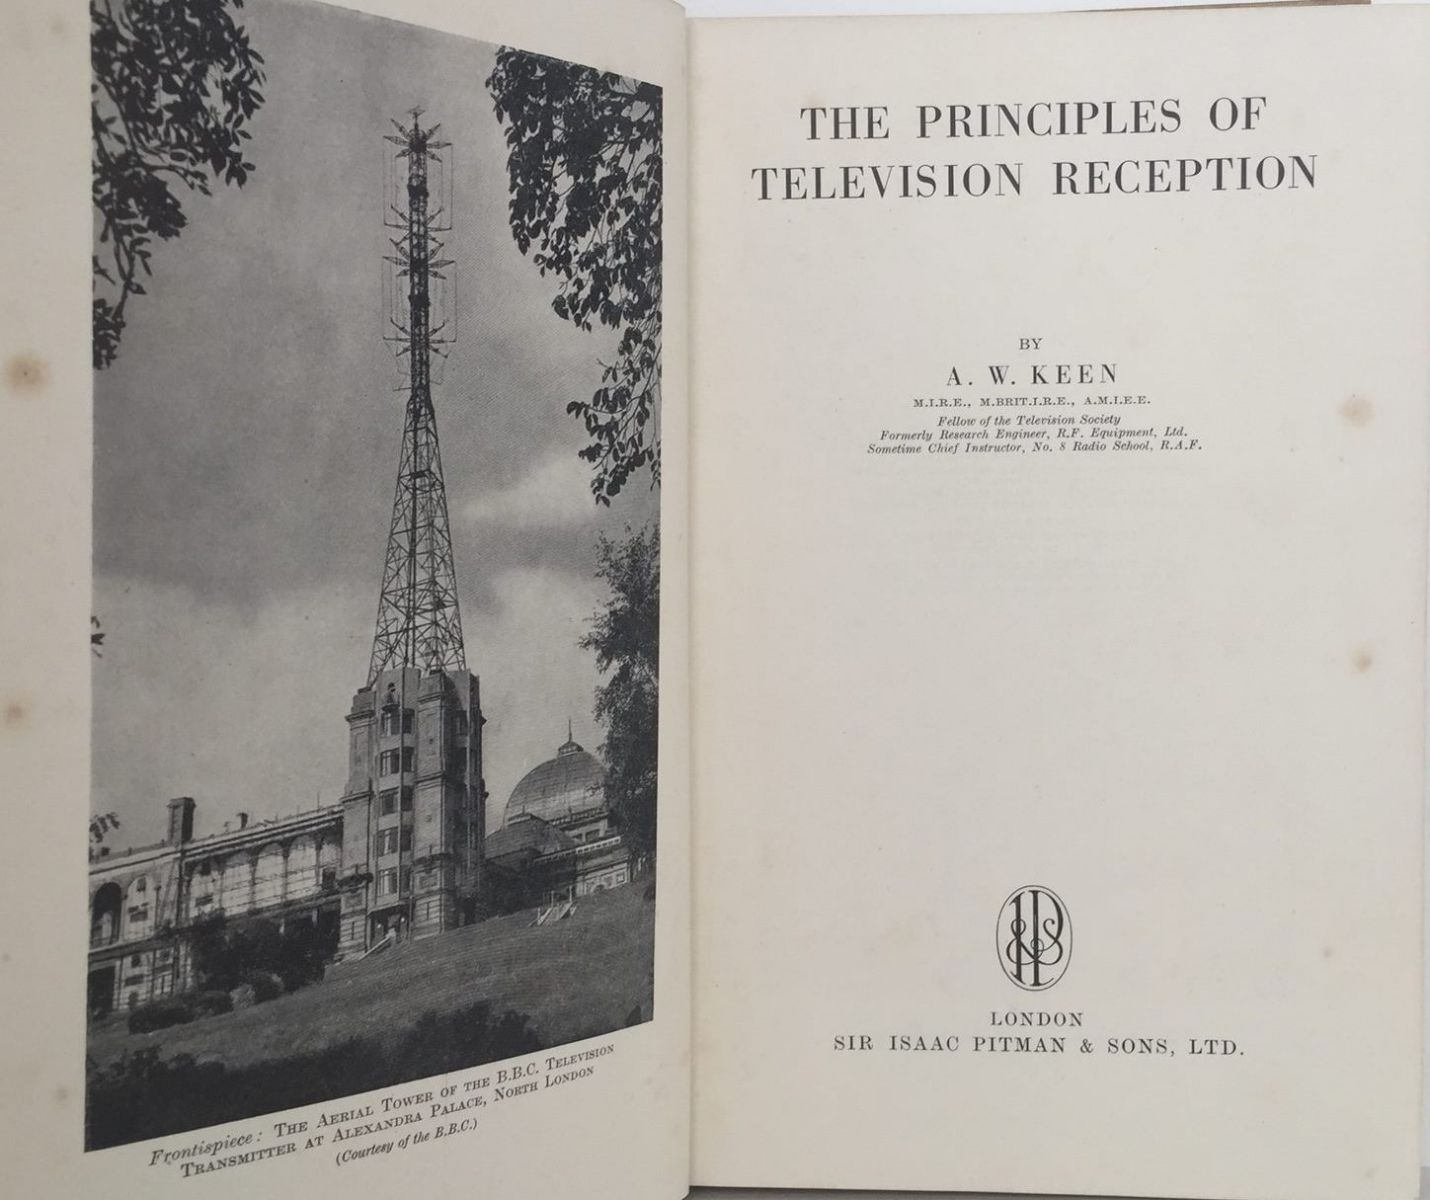 THE PRINCIPALS OF TELEVISION RECEPTION